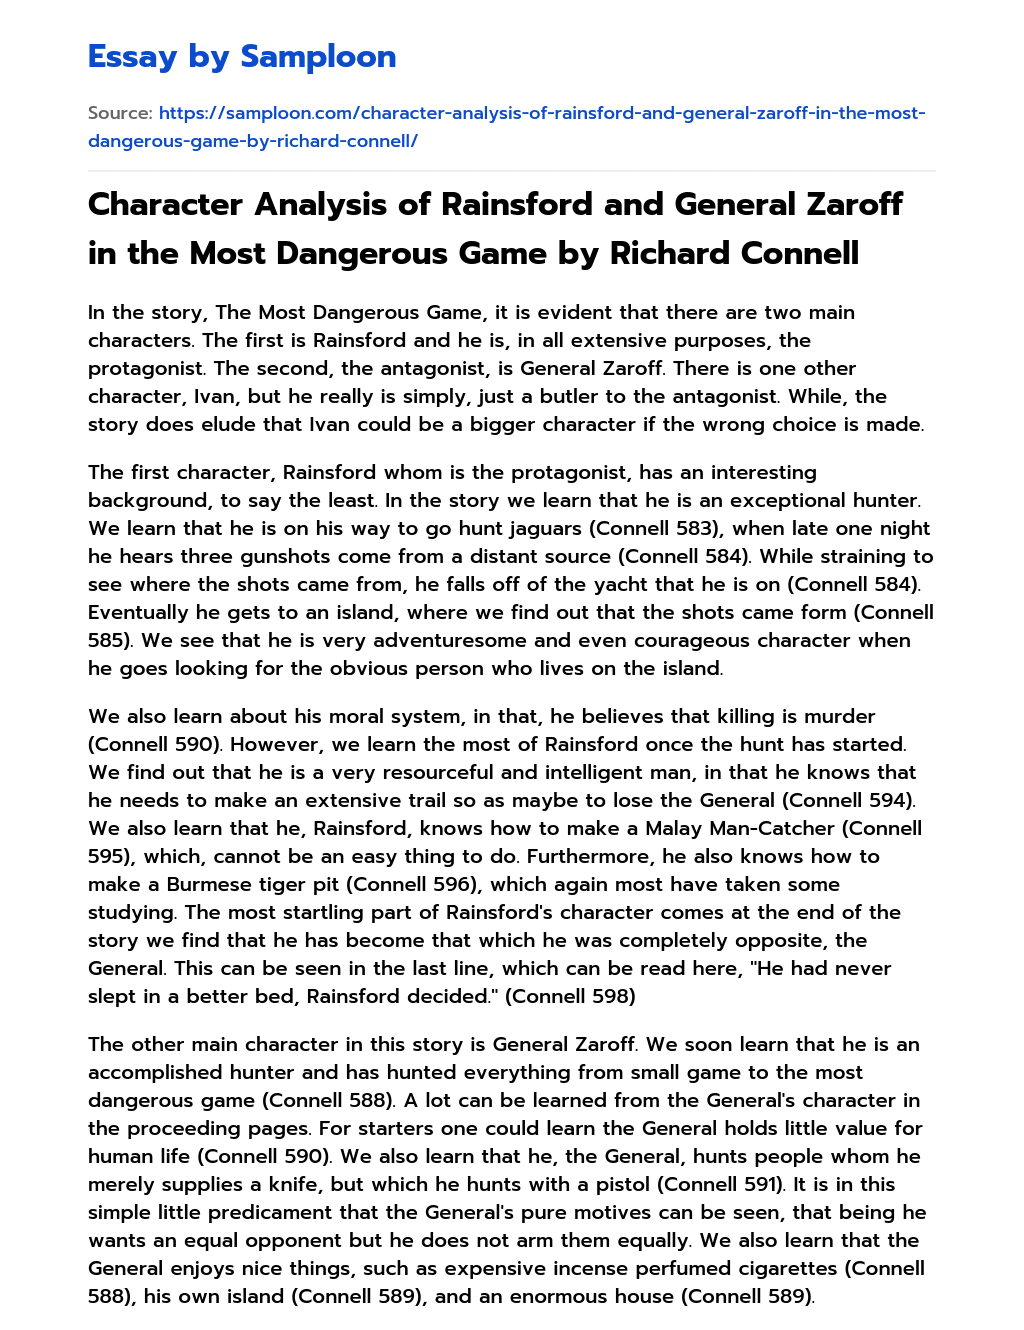 rainsford character analysis essay